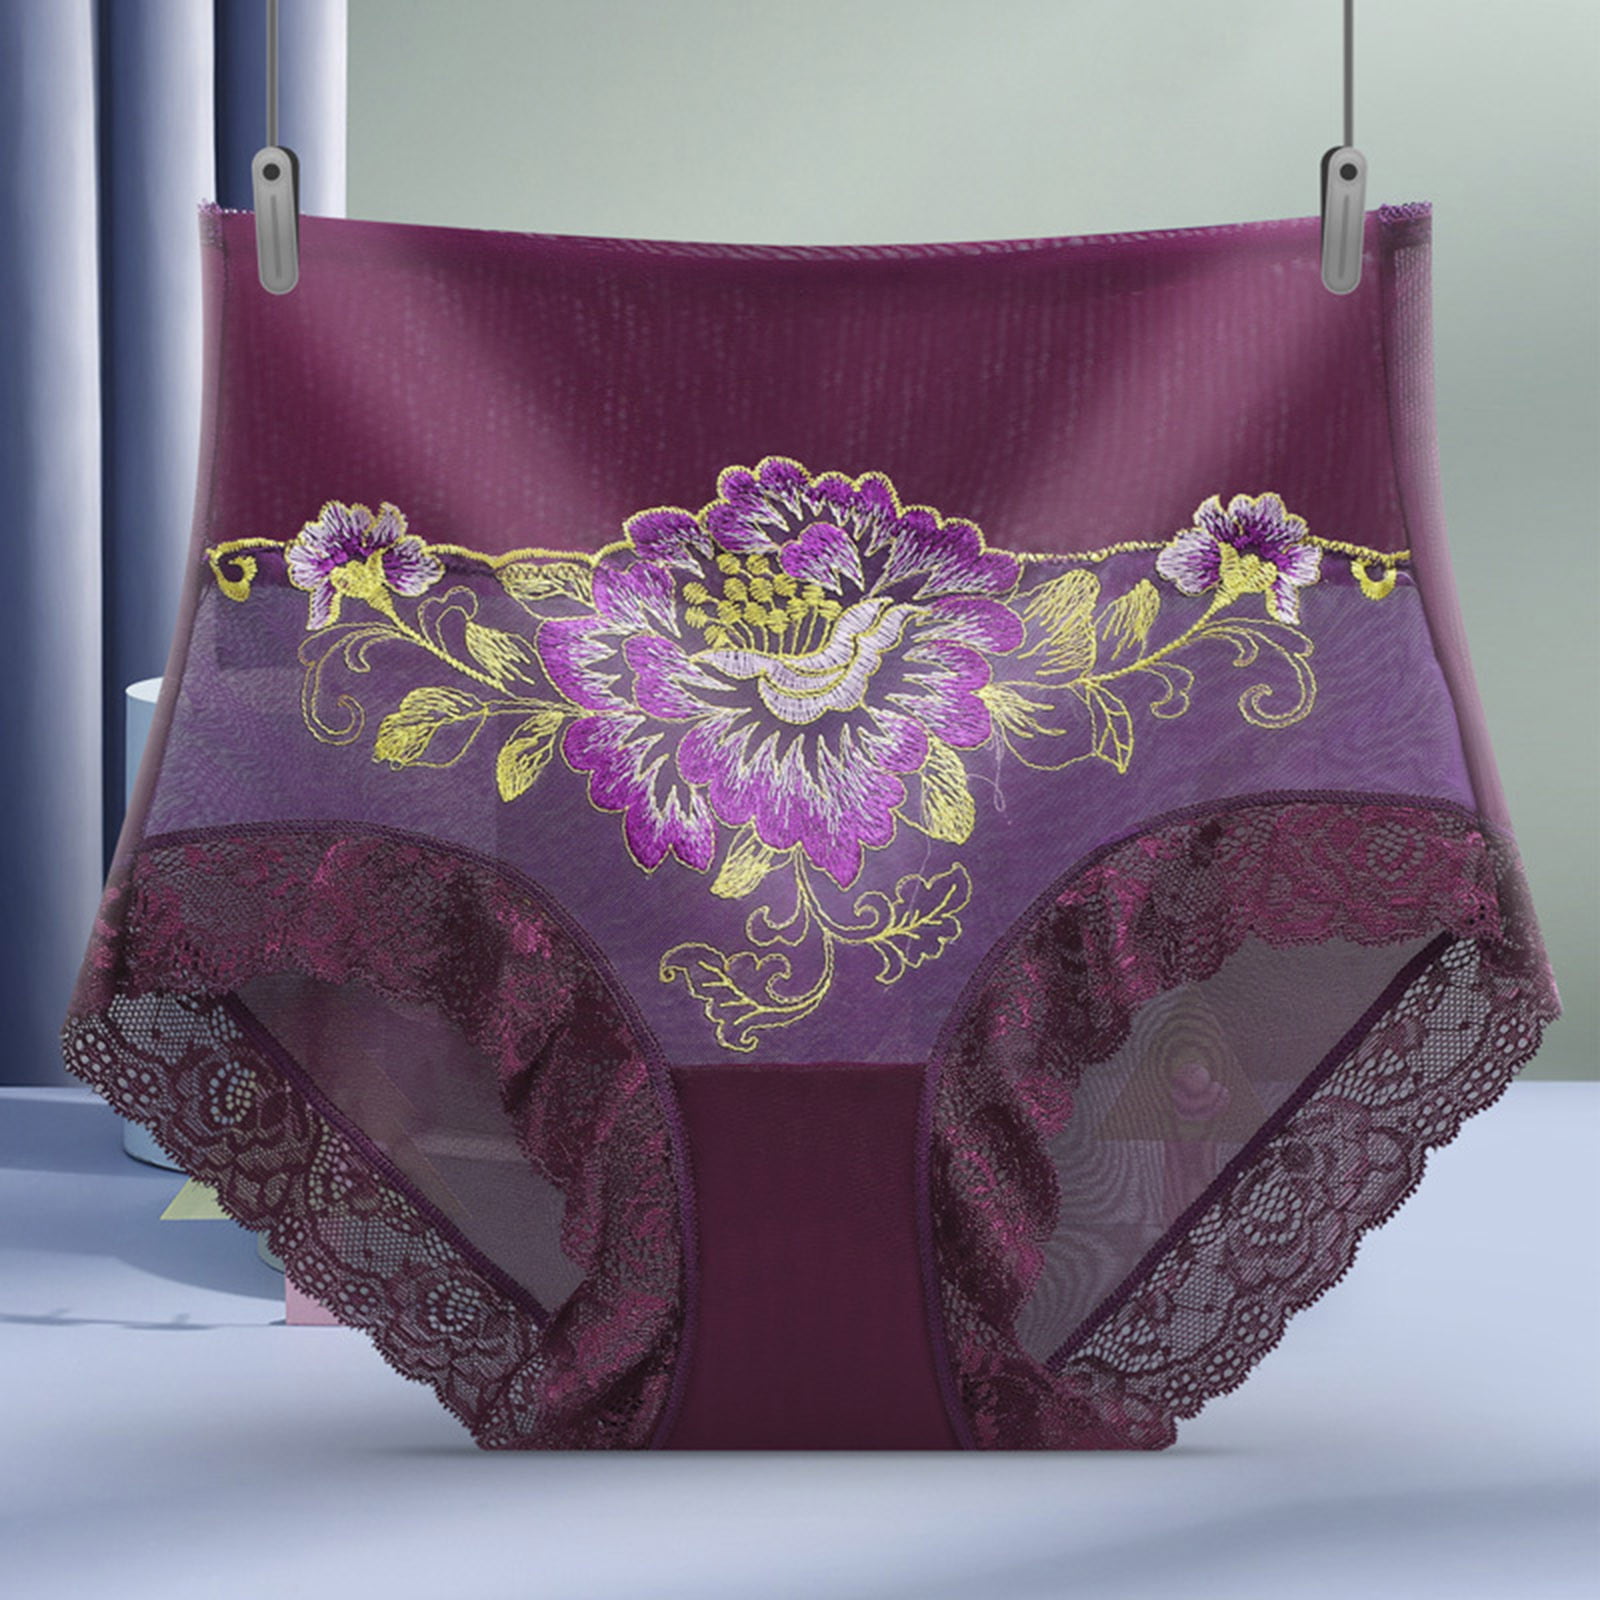 LBECLEY After Birth Belly Women's Leopard Print High Waist Tight Briefs  Boxer Underwear Breathable Underwear Satin Panties Lace Trim Purple Xl